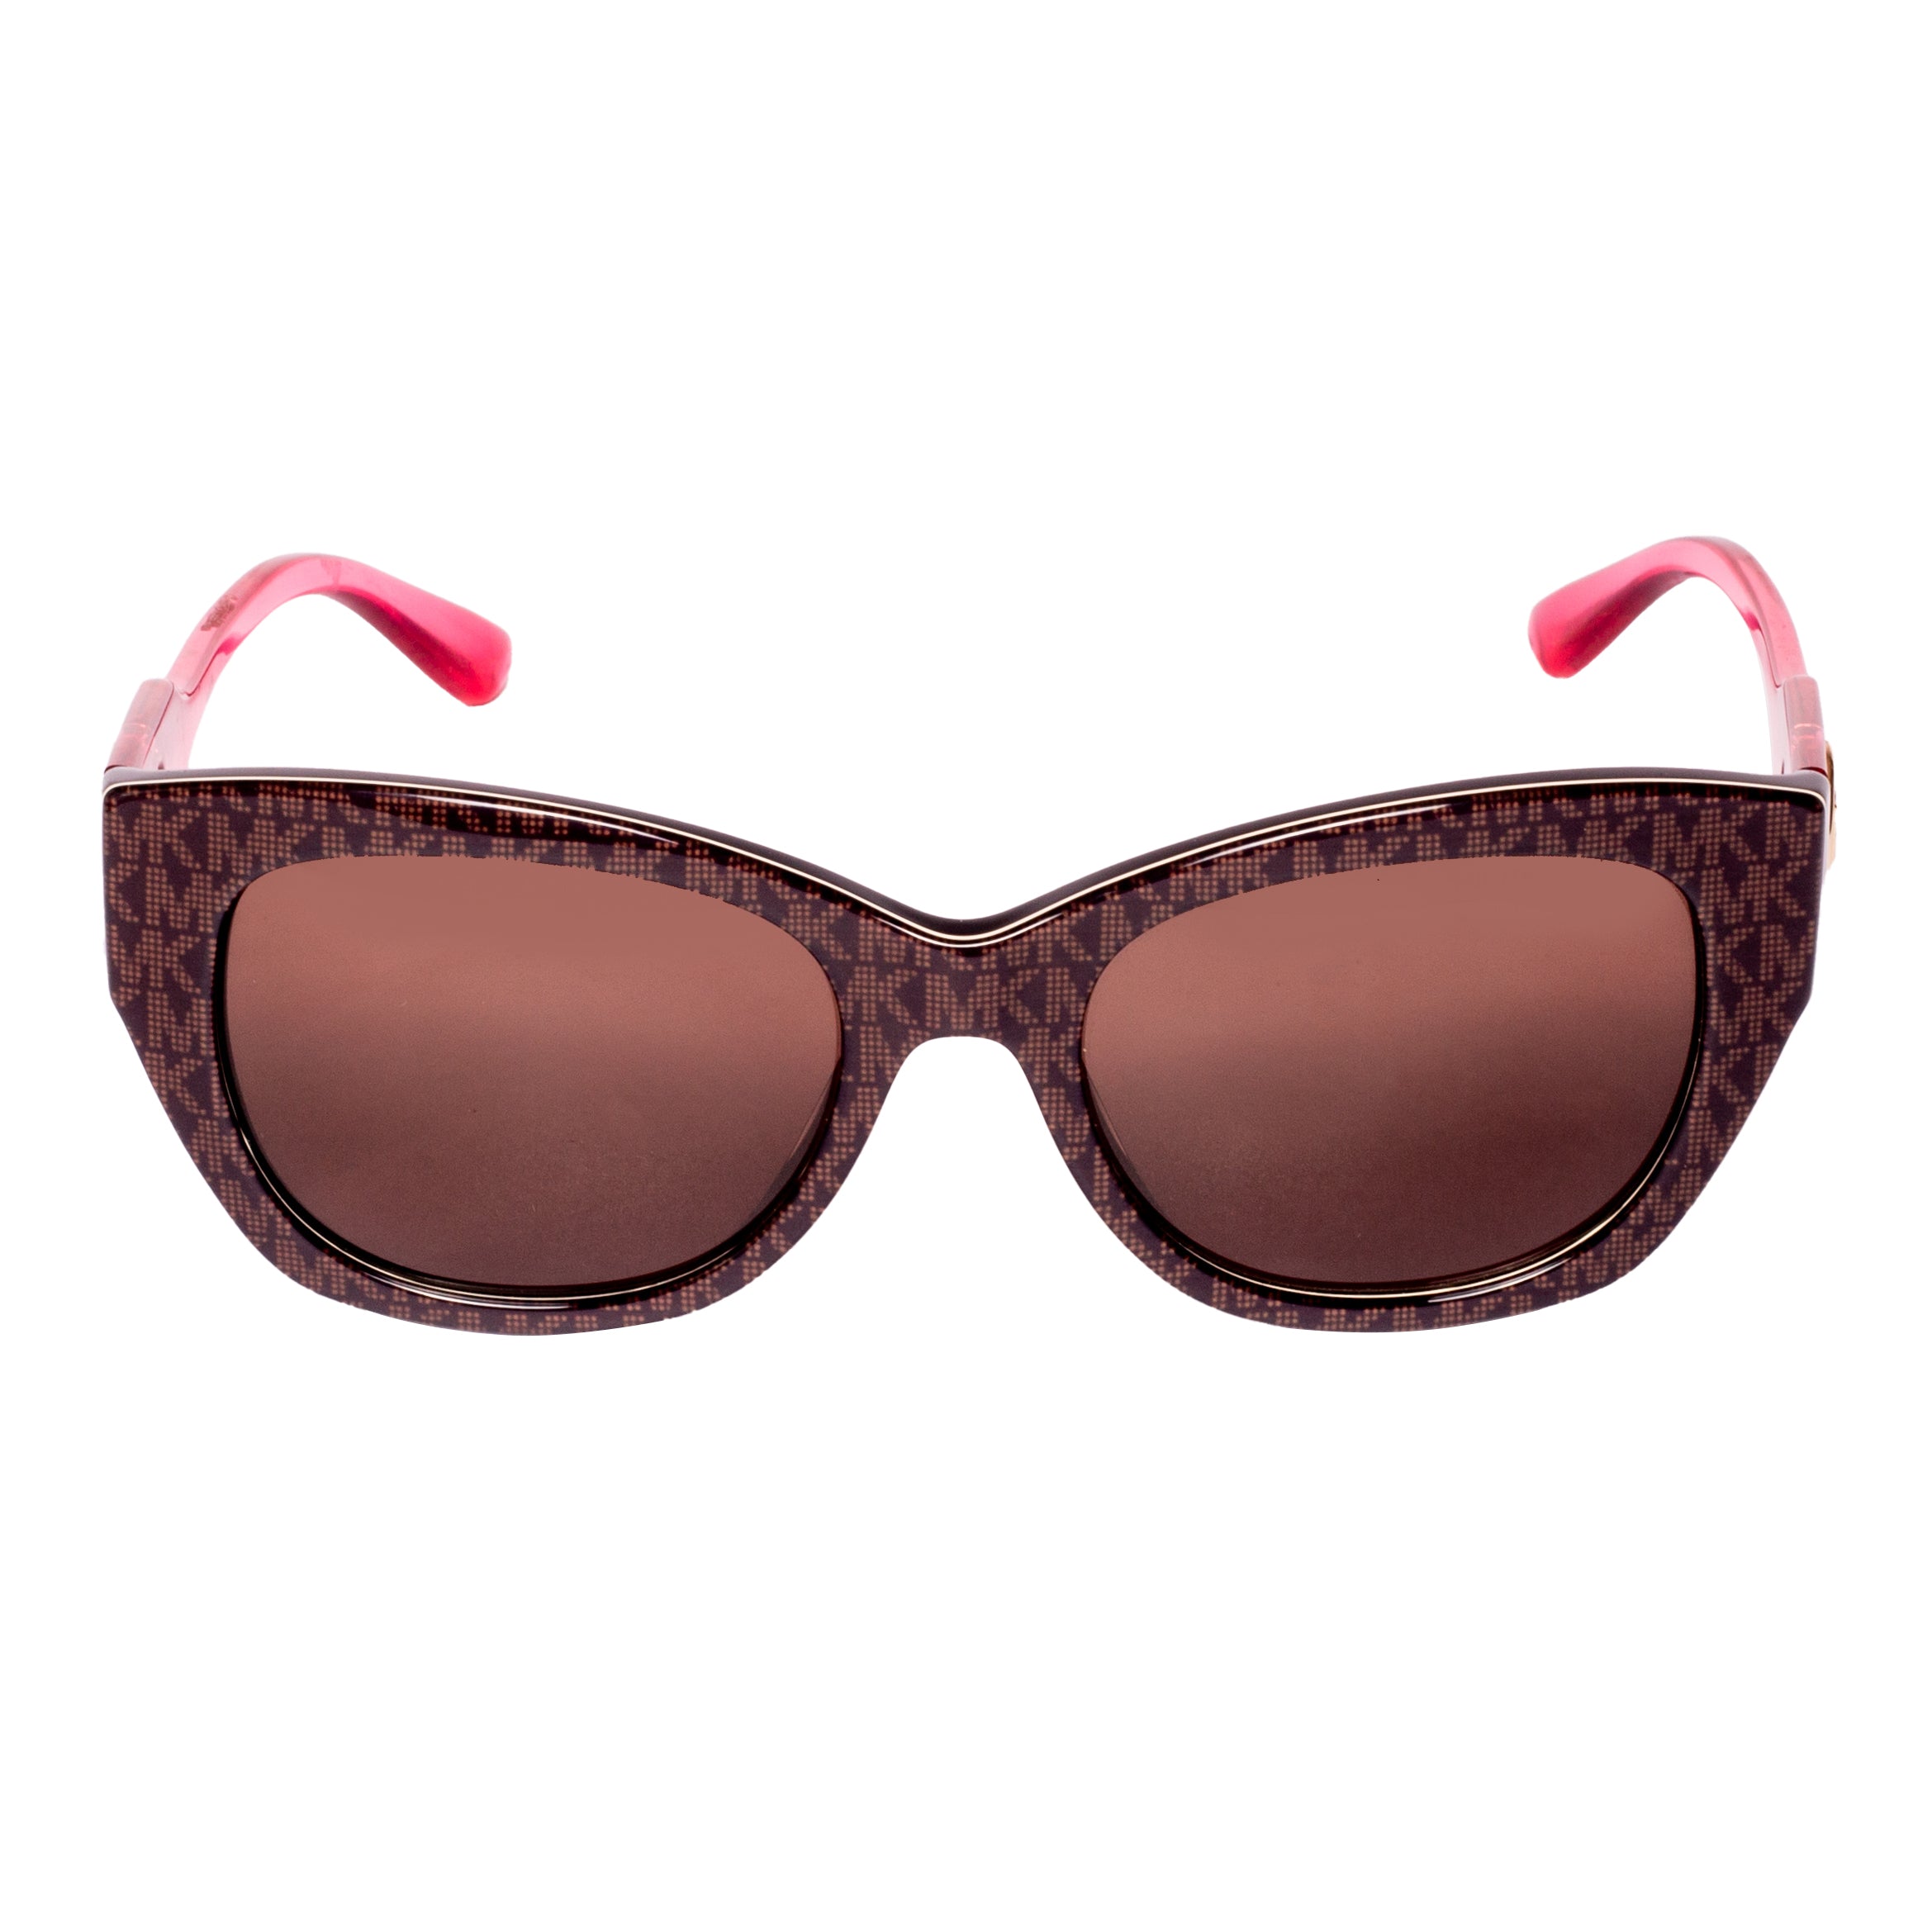 Michael Kors-2119-53-335573 Sunglasses - Premium Sunglasses from Michael Kors - Just Rs. 11290! Shop now at Laxmi Opticians